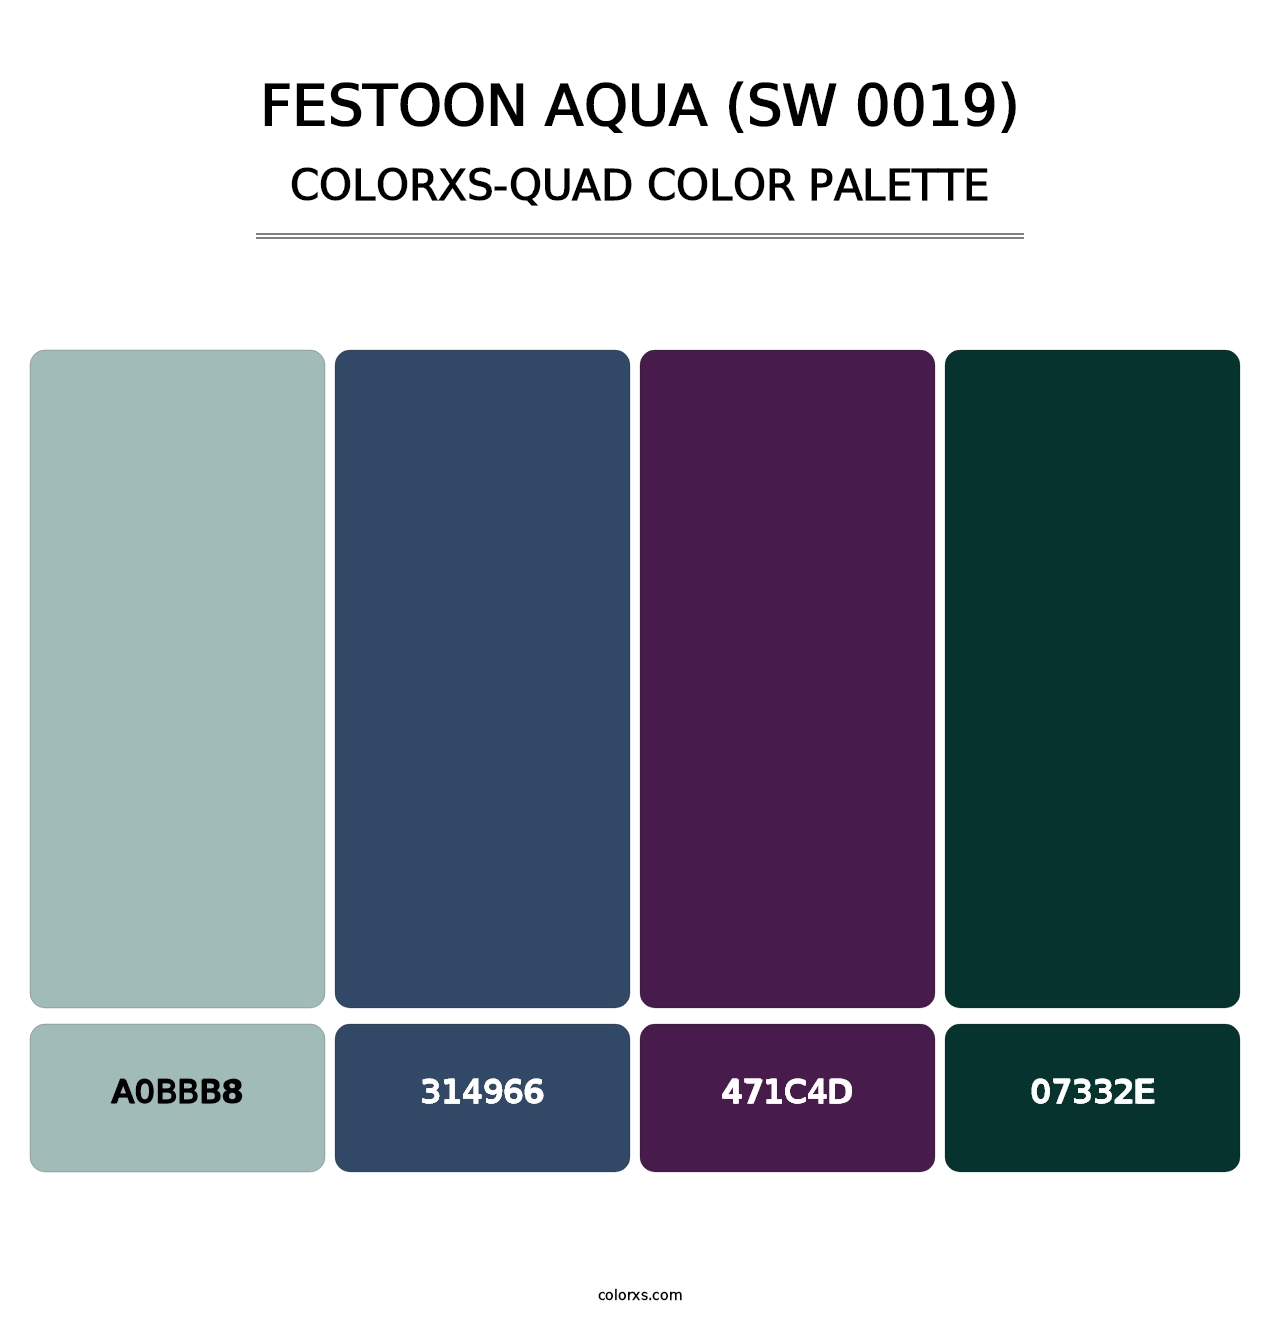 Festoon Aqua (SW 0019) - Colorxs Quad Palette